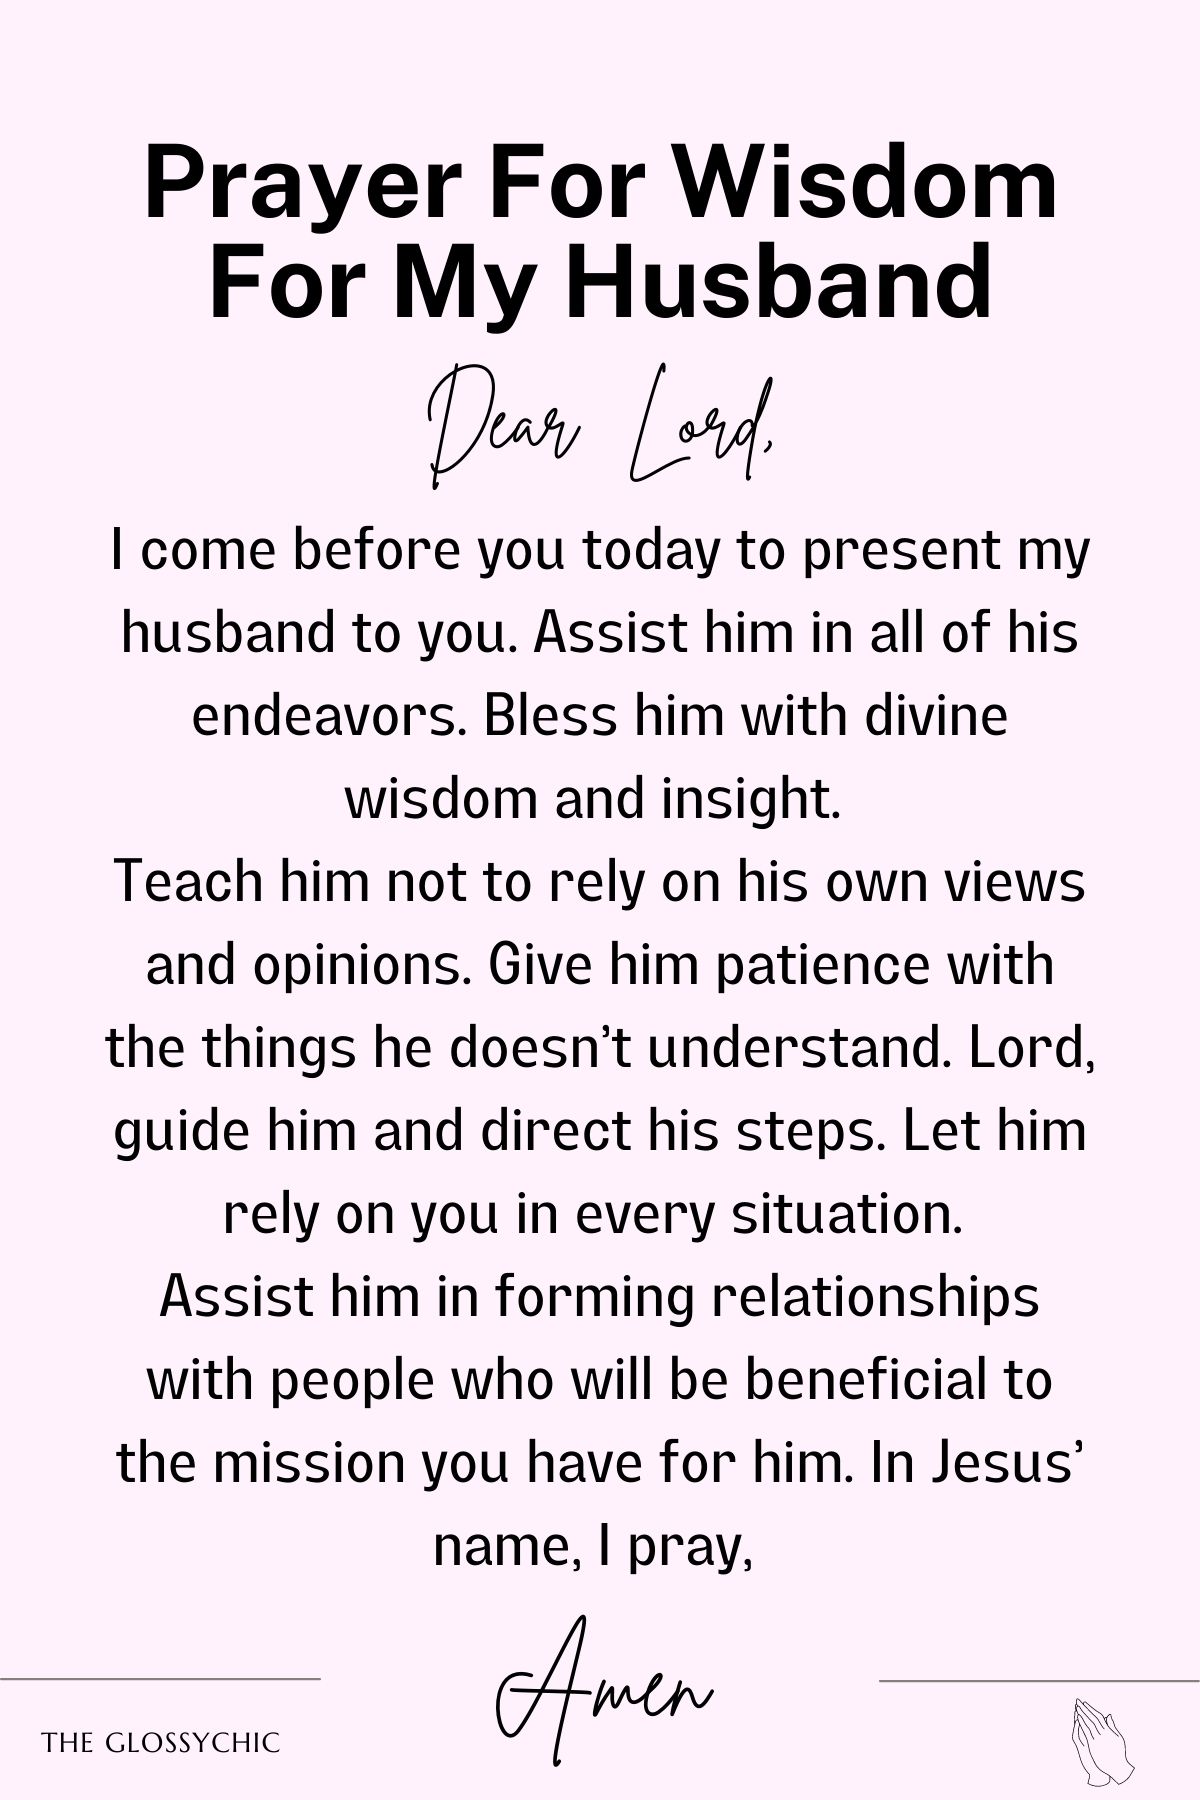 Prayer for wisdom for my husband